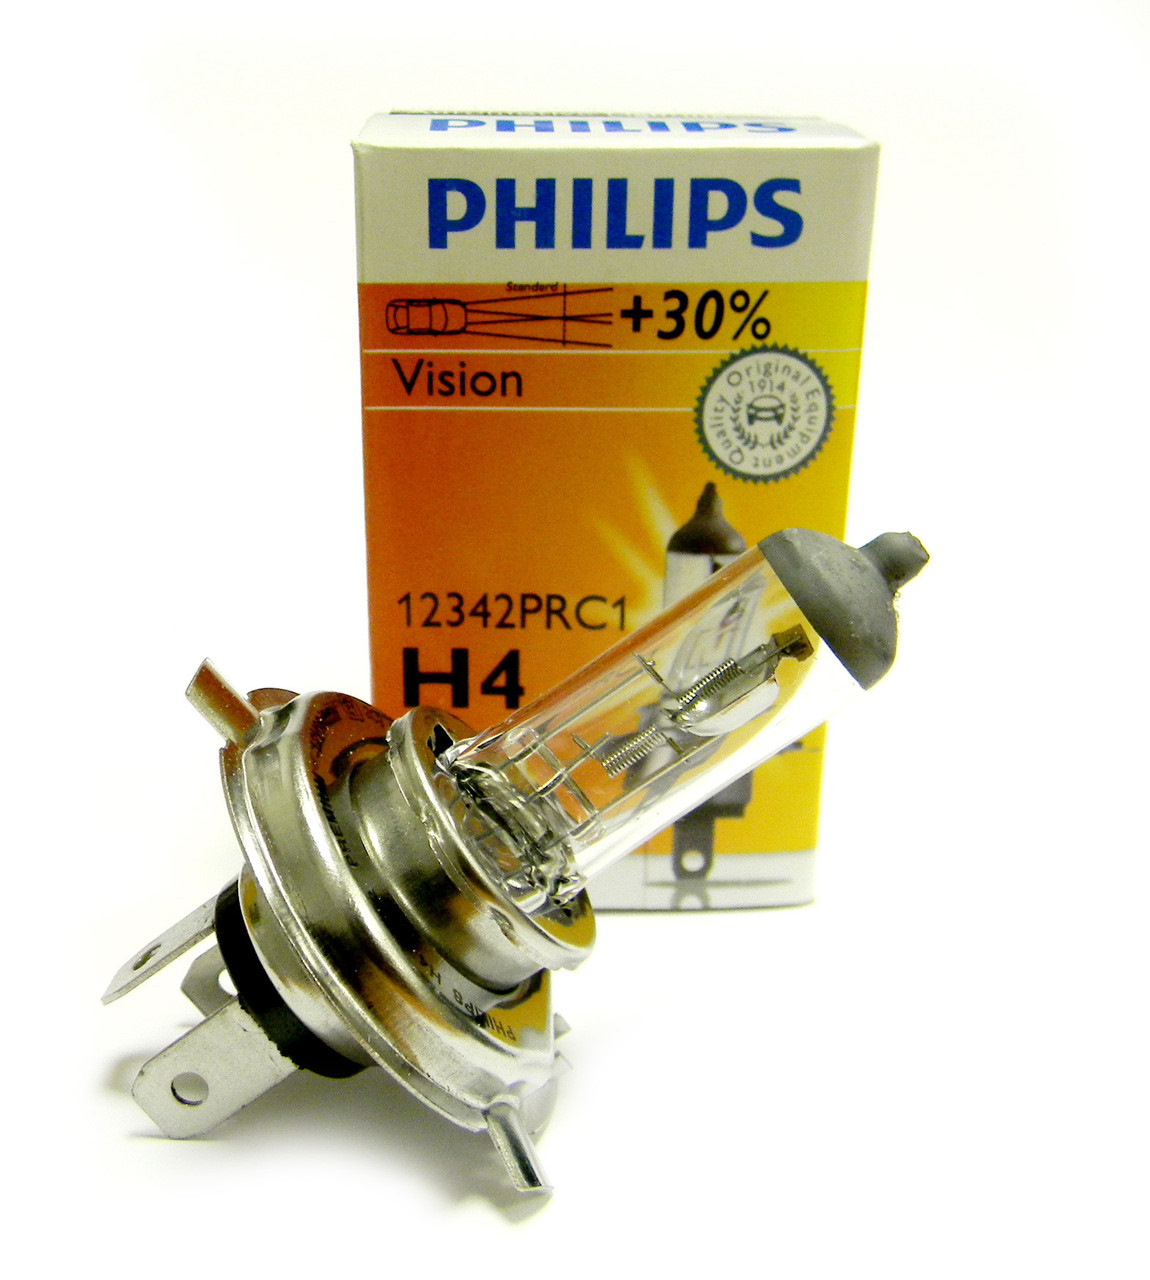 Philips h4 купить. Лампа 12342 Филипс. Лампа h4 Philips Vision +30. Philips h4 12342prc1. Лампа h4 12v 60/55w +30% p43t 12342pr* Philips.